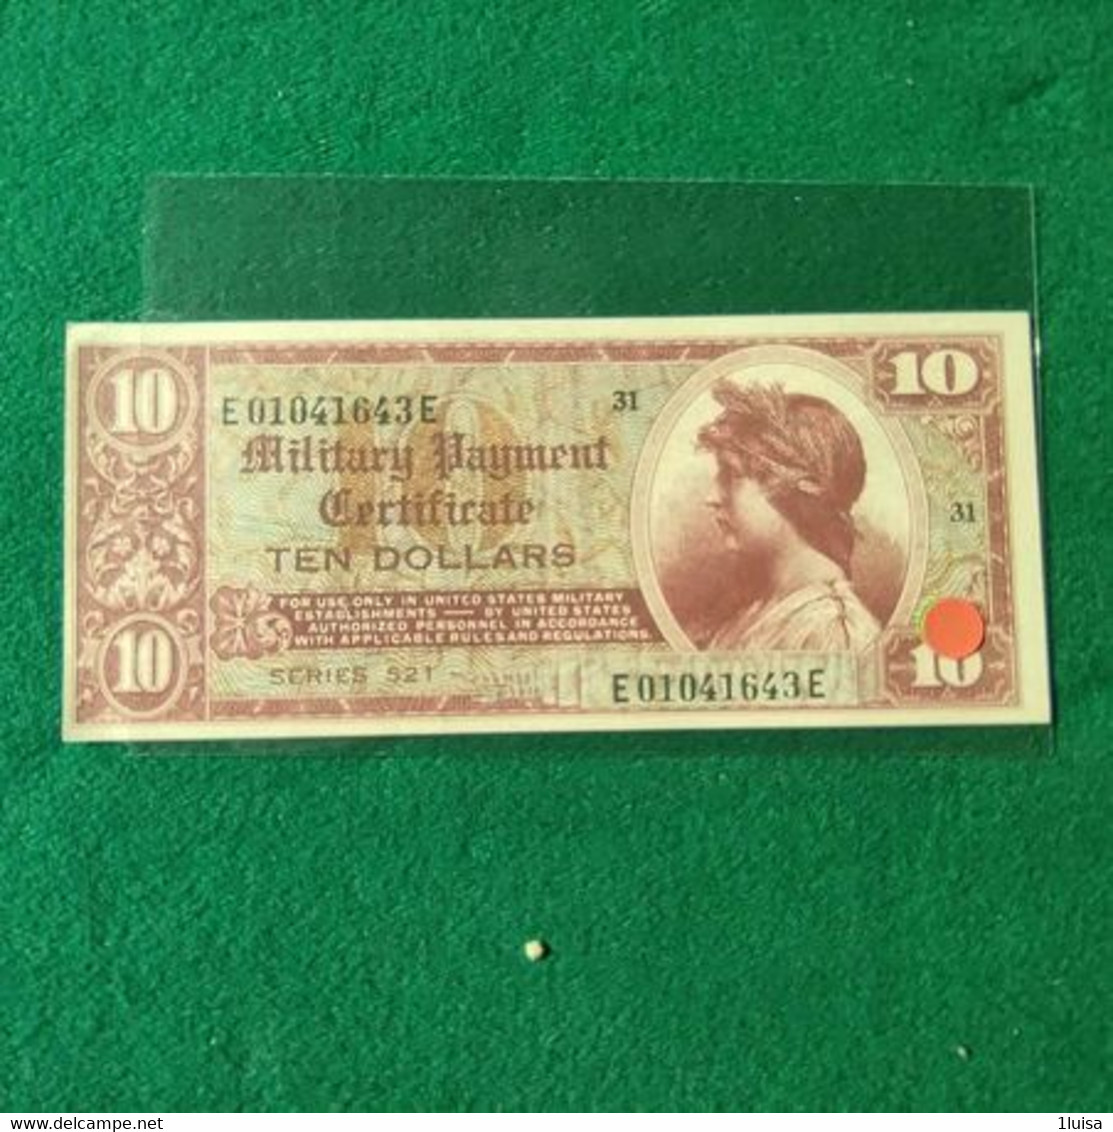 STATI UNITI 10 DOLLARS COPY - 1954-1958 - Series 521